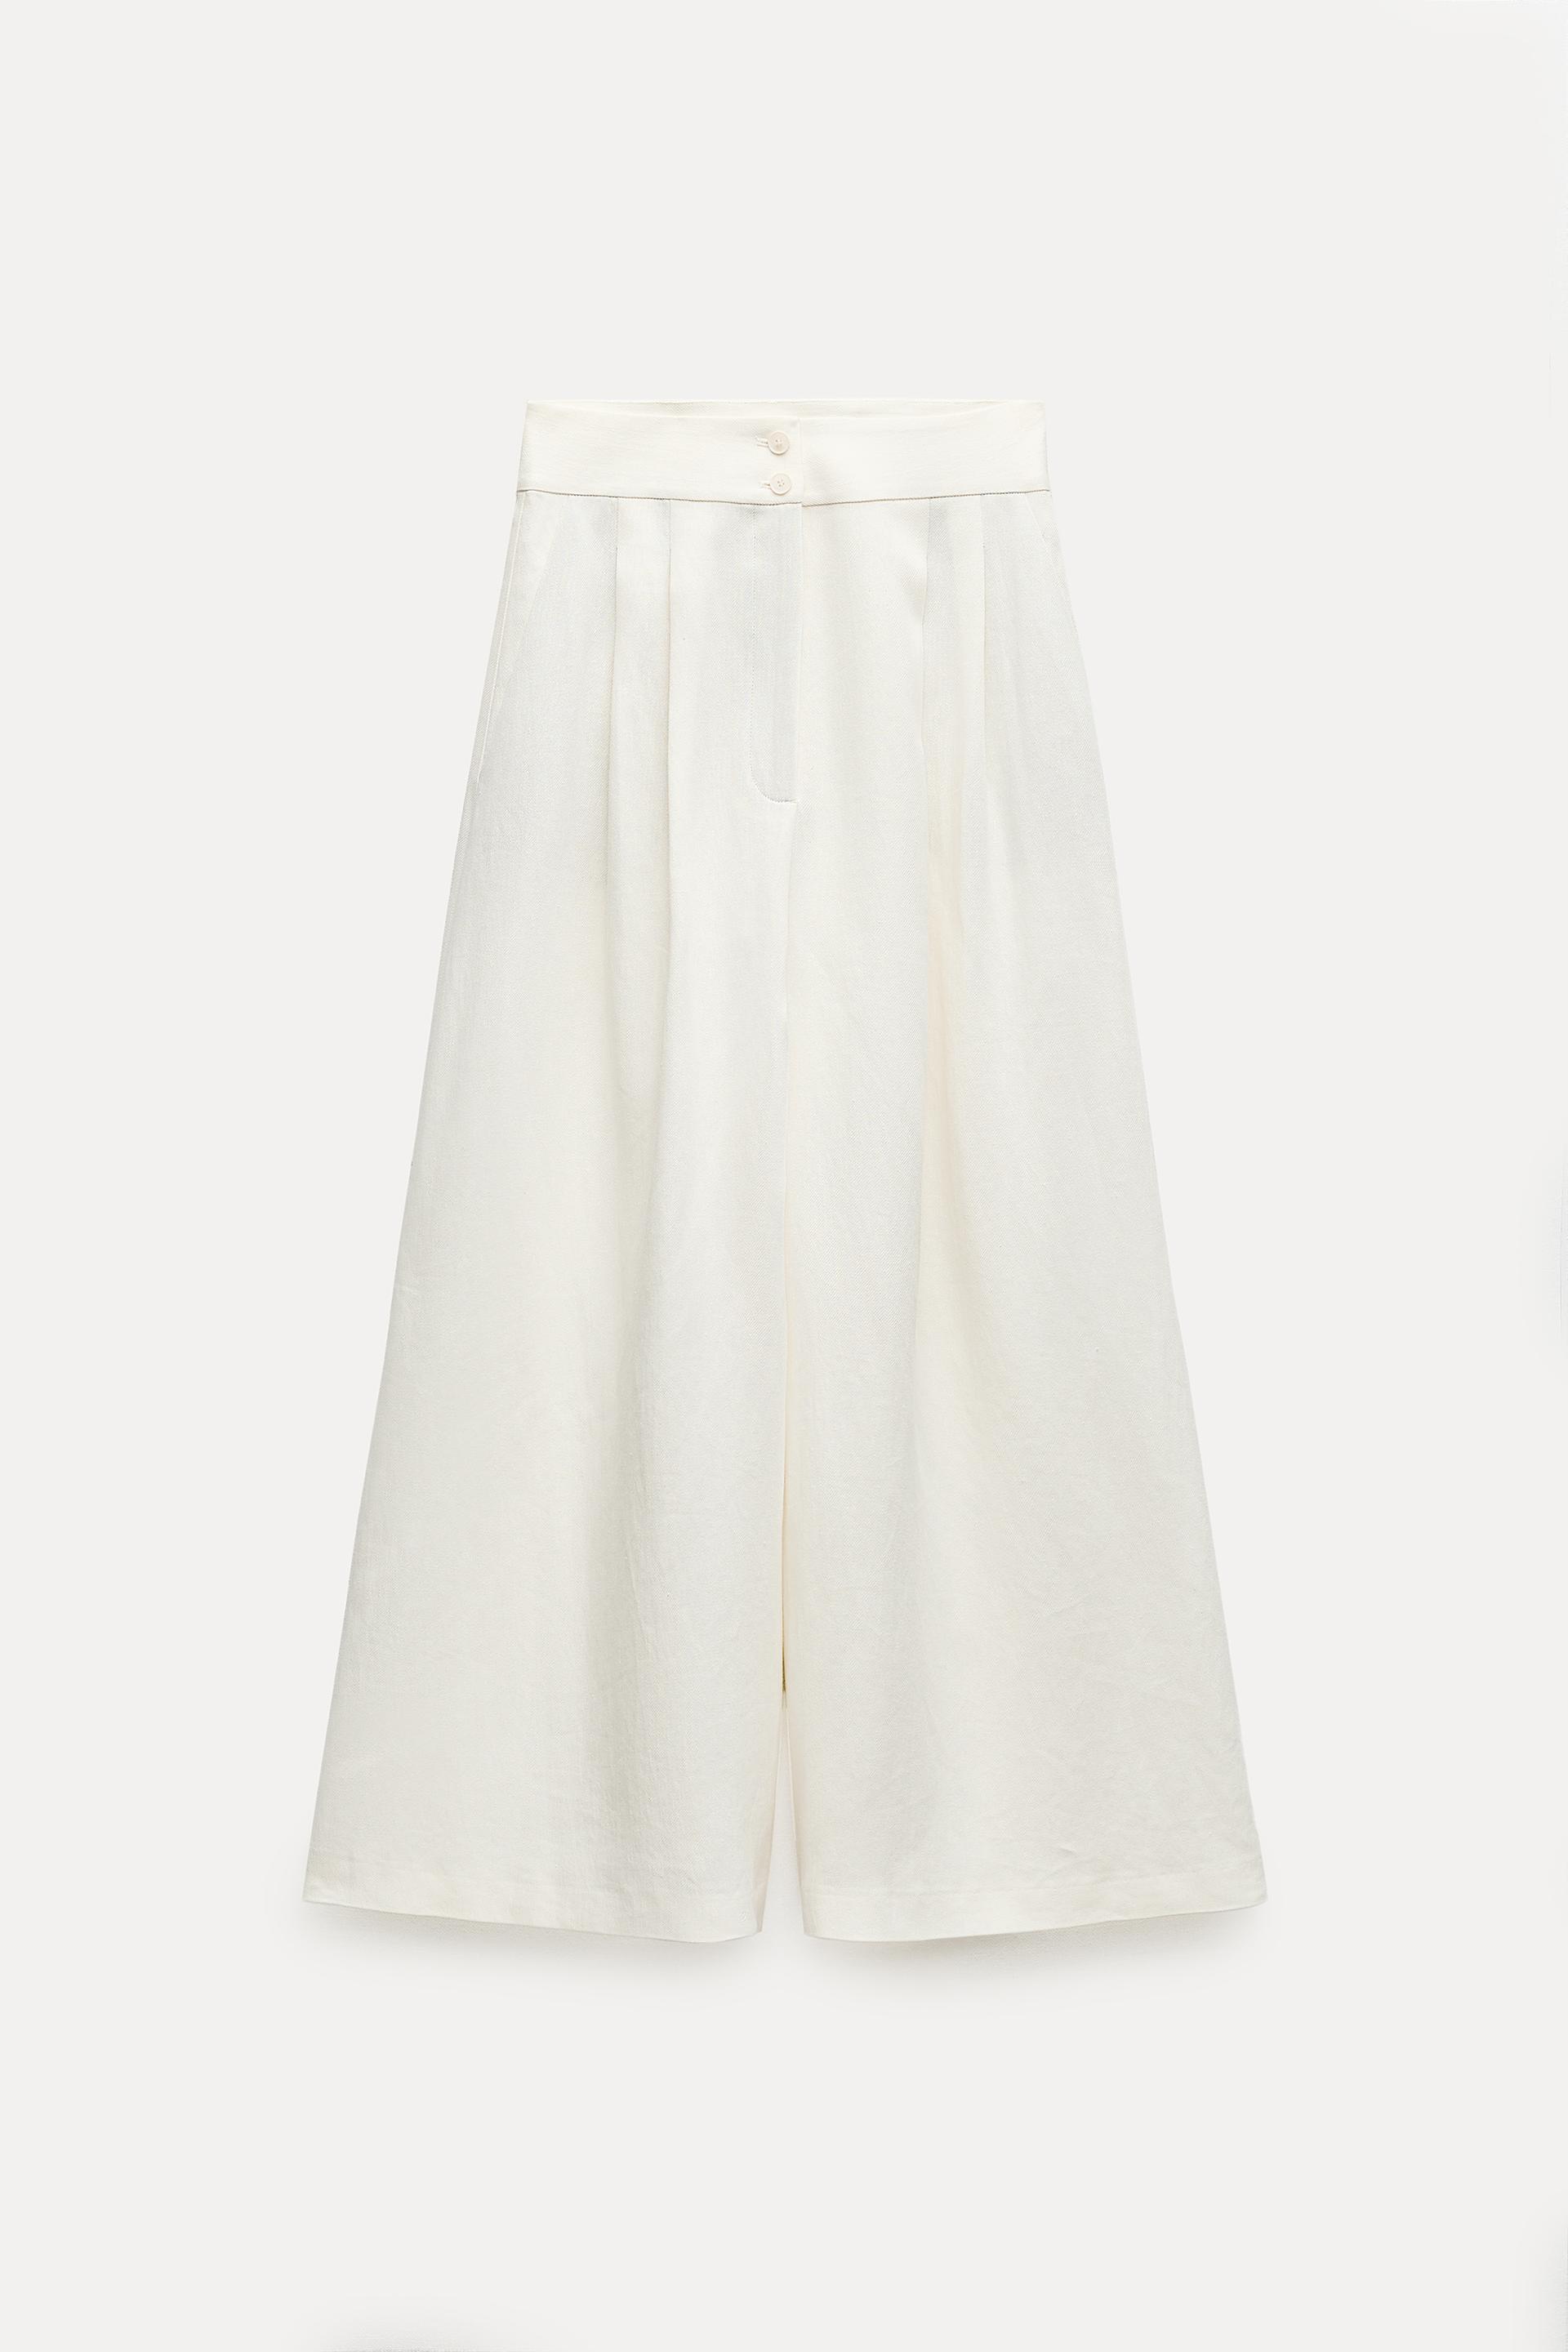 Брюки Zara ZW Collection Darted Linen, экрю брюки zara zw collection embroidered экрю